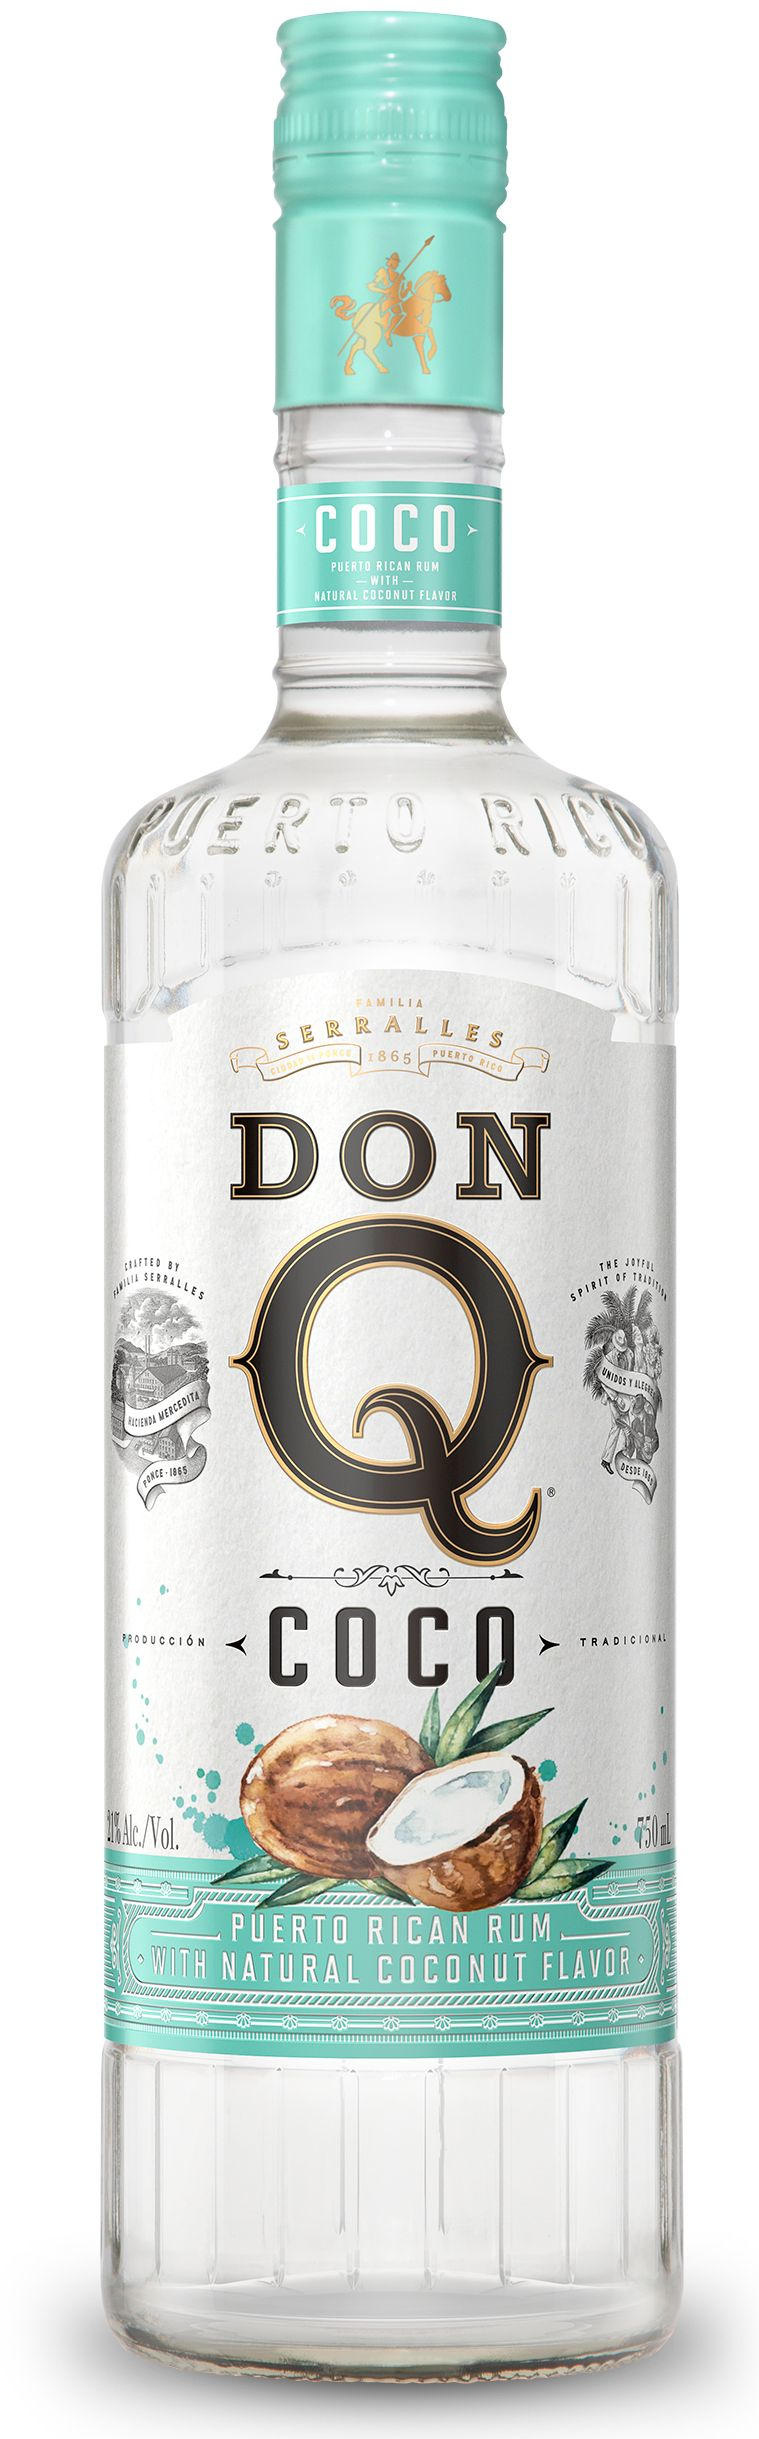 Don Q Coconut Rum - Barbank